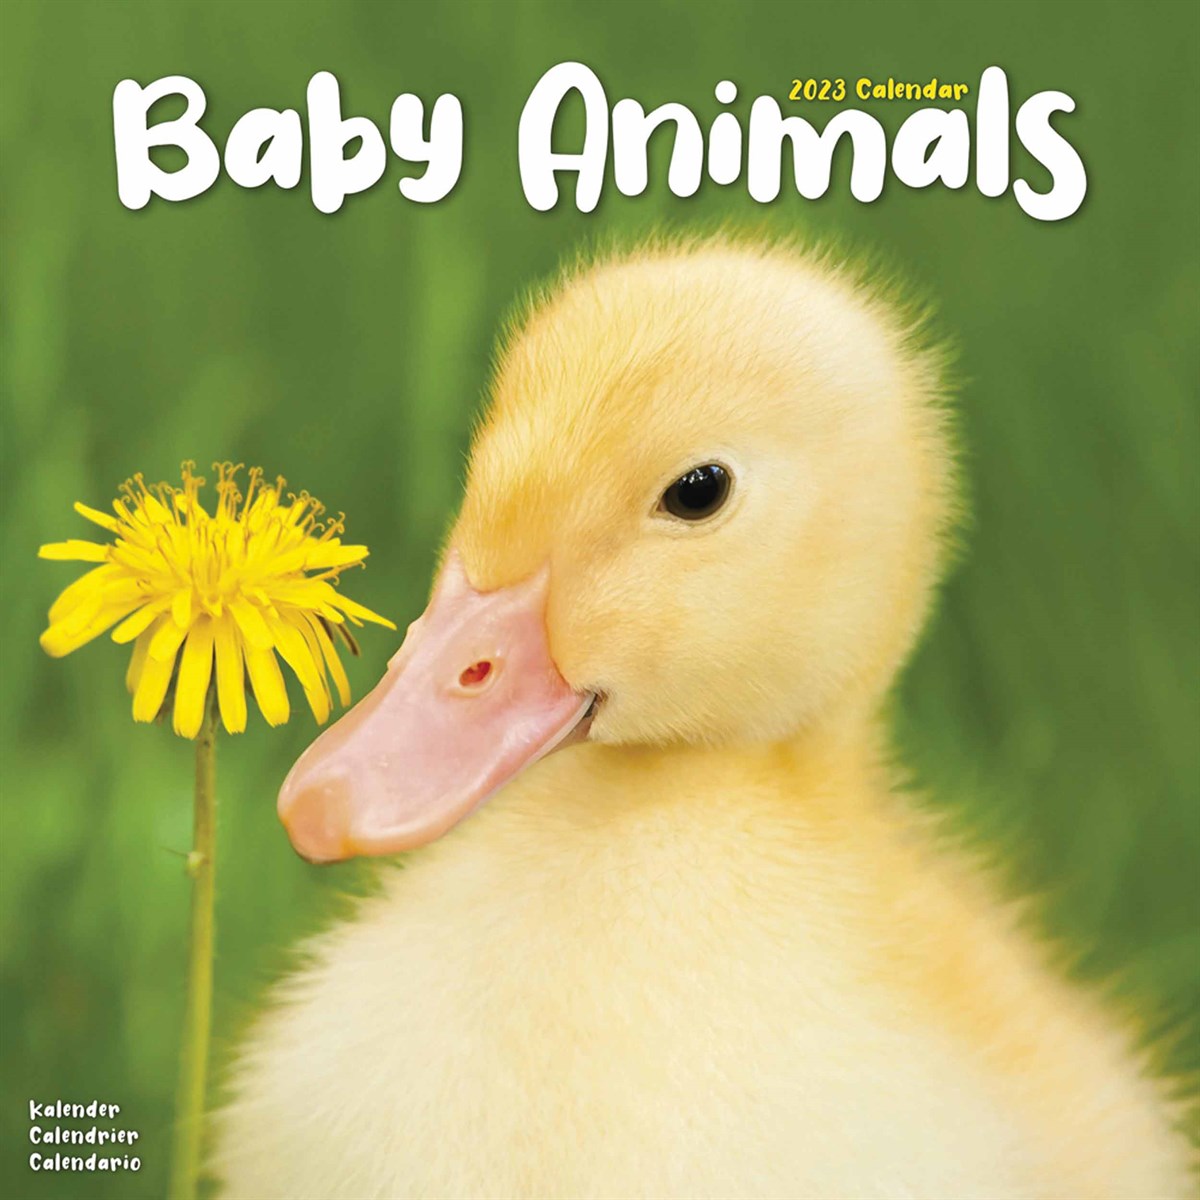 Baby Animals 2023 Calendars